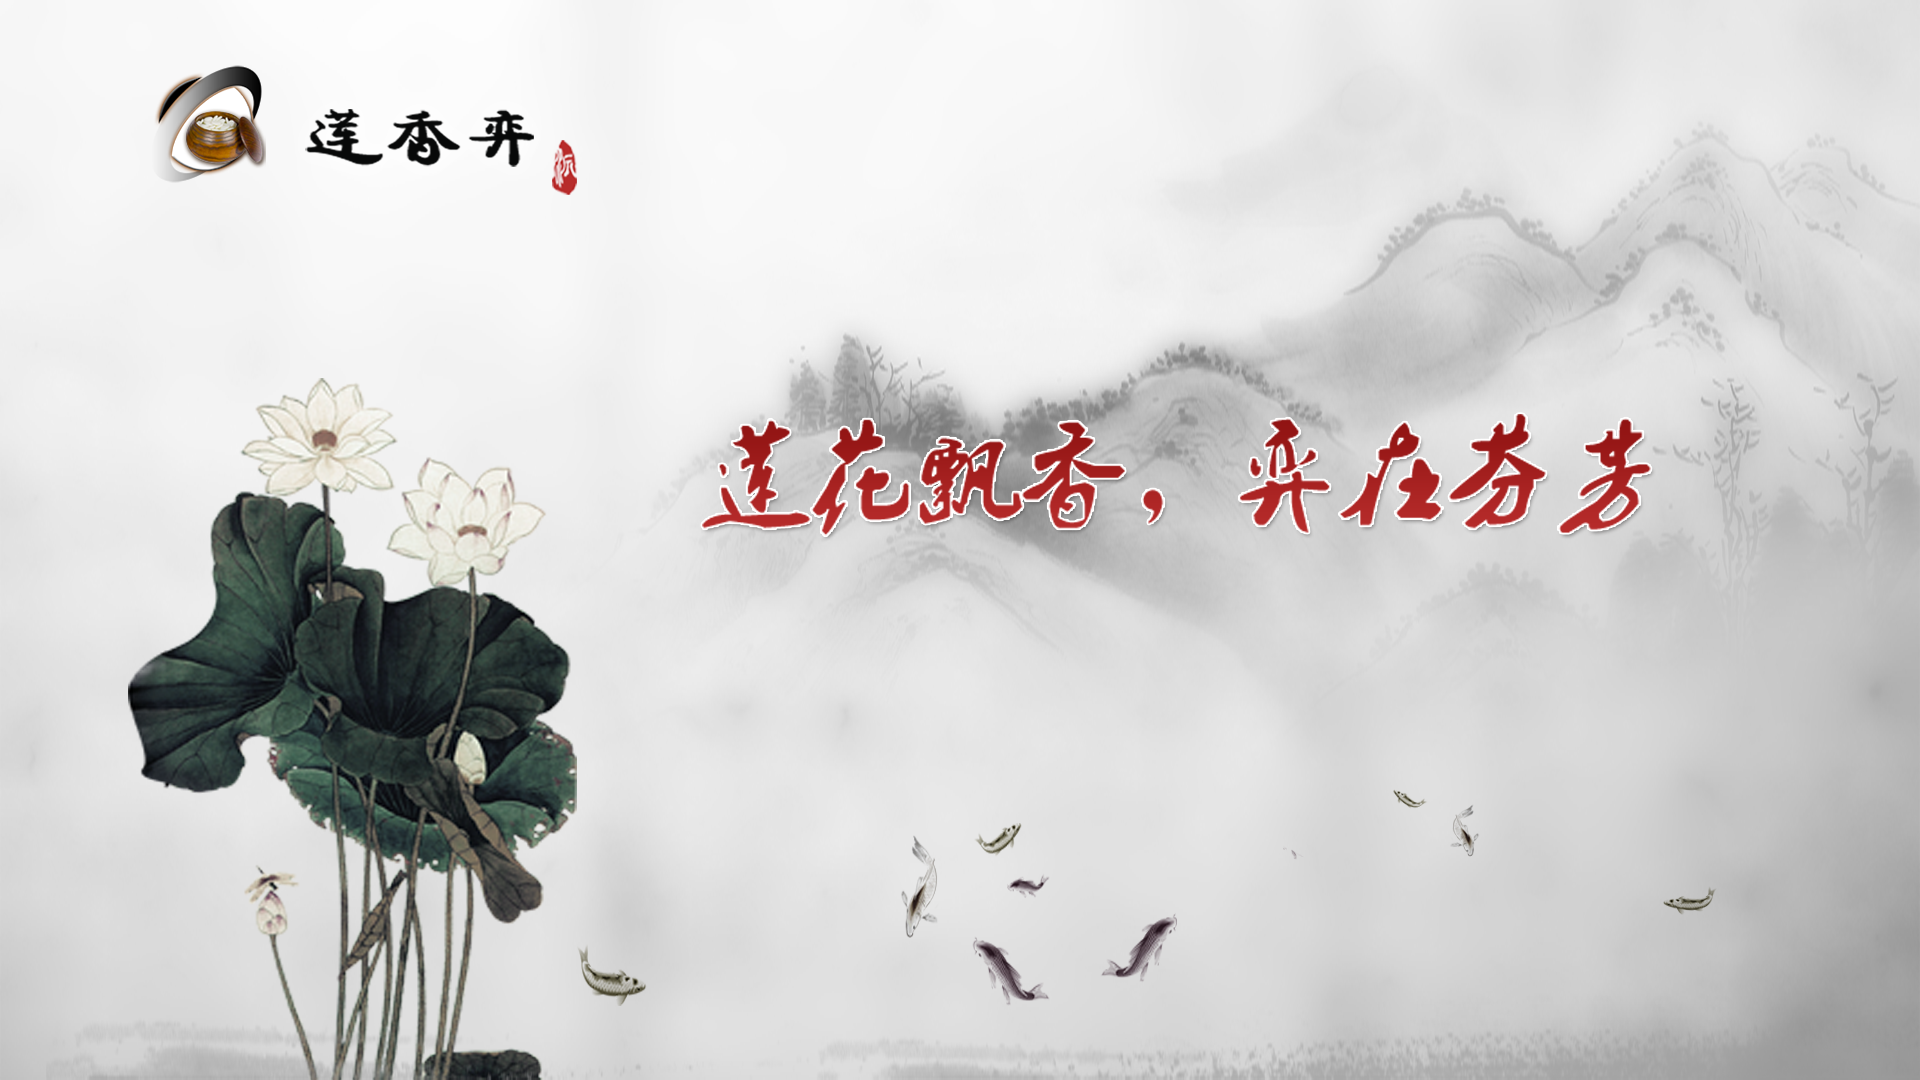 Banner of Lian Xiang은 바둑을 연기합니다. 8.20.26